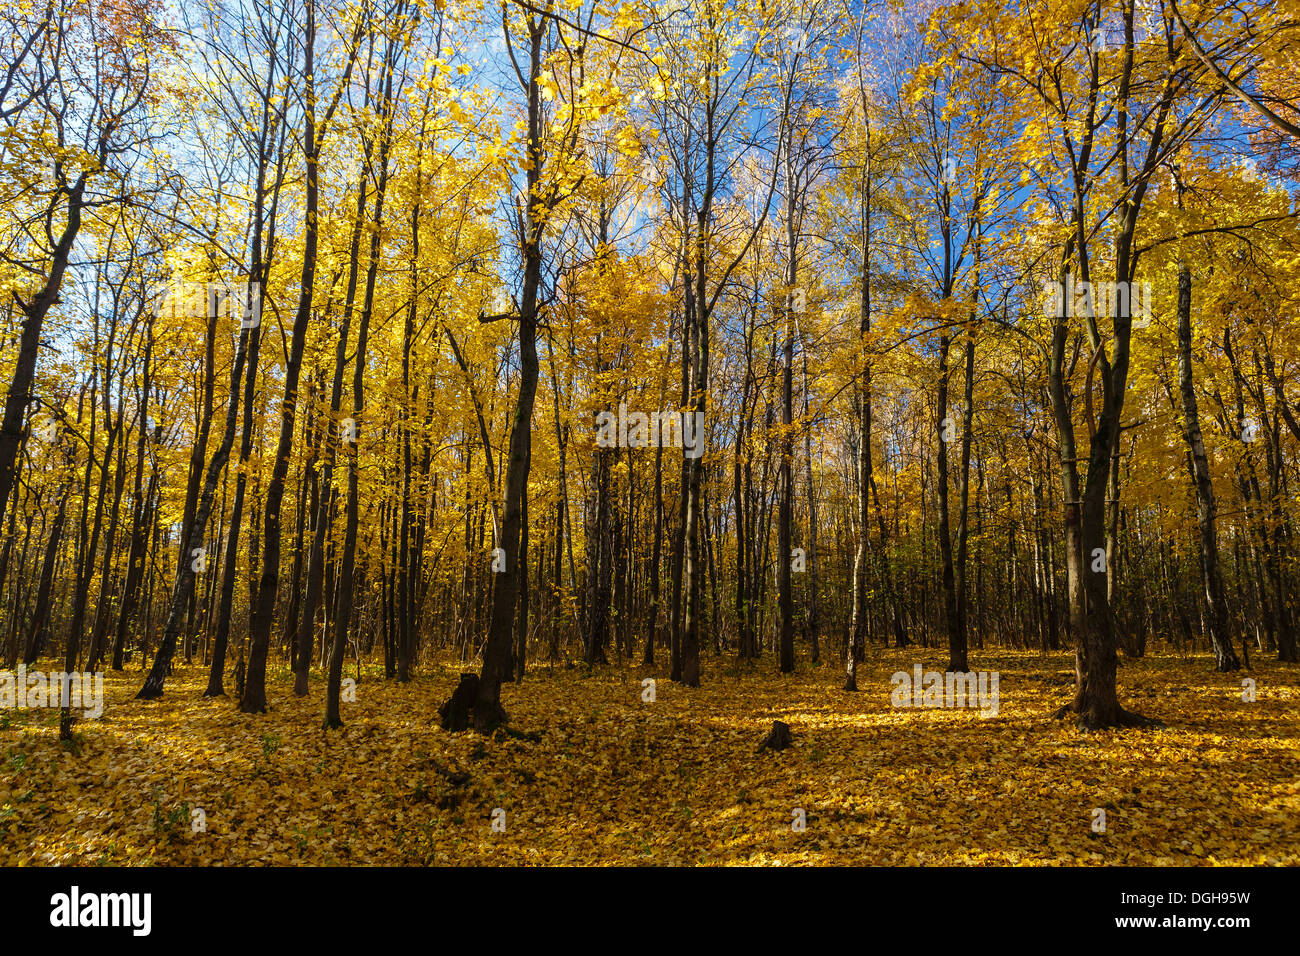 Golden wood in fall season Stock Photo